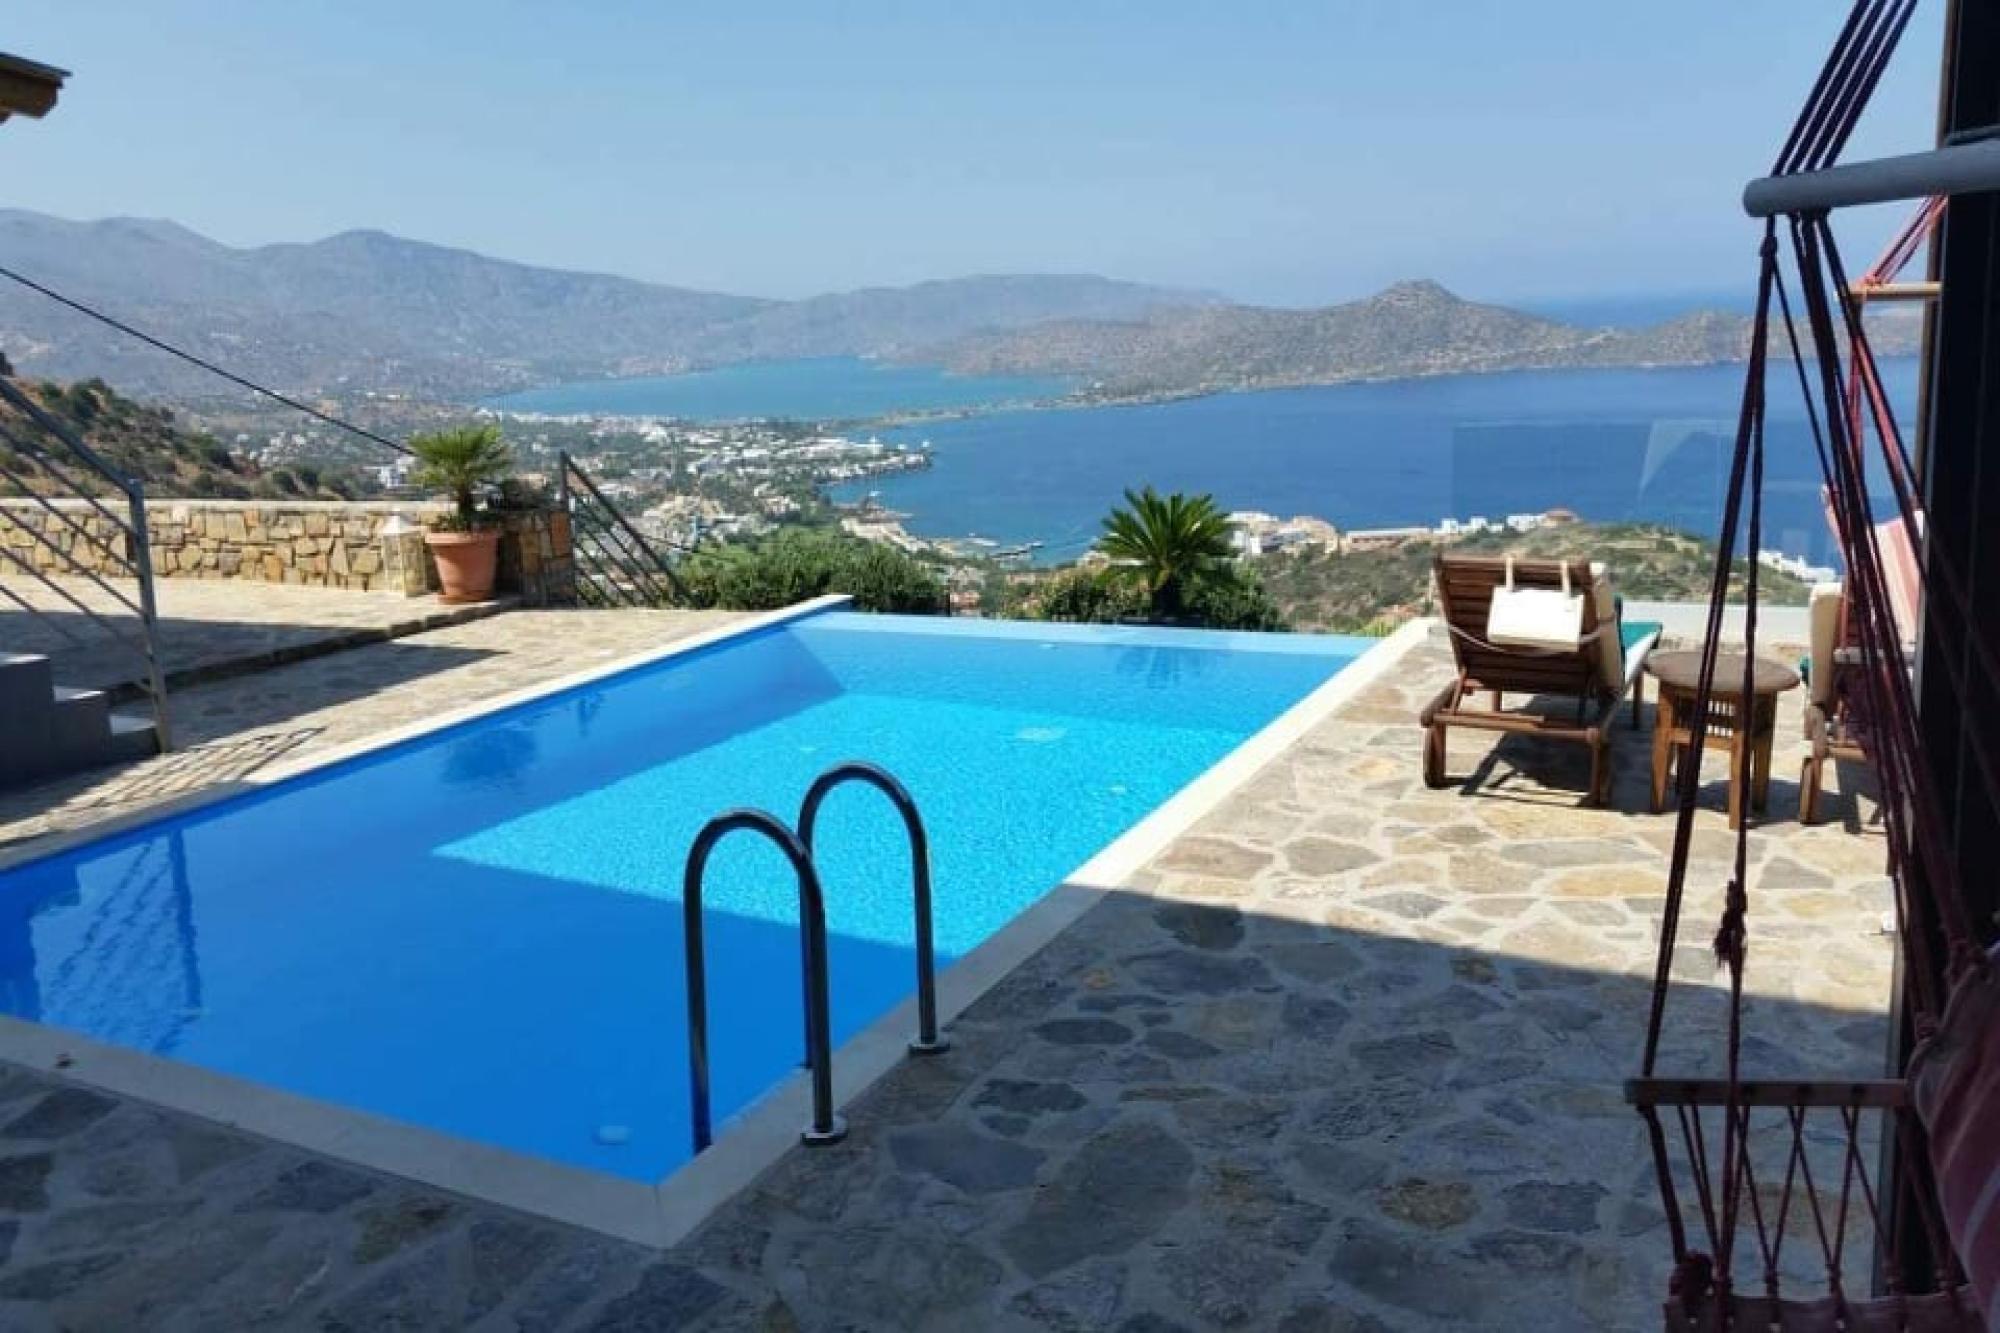 3 bedroom villa with spectacular views of Elounda and Mirabello bays.